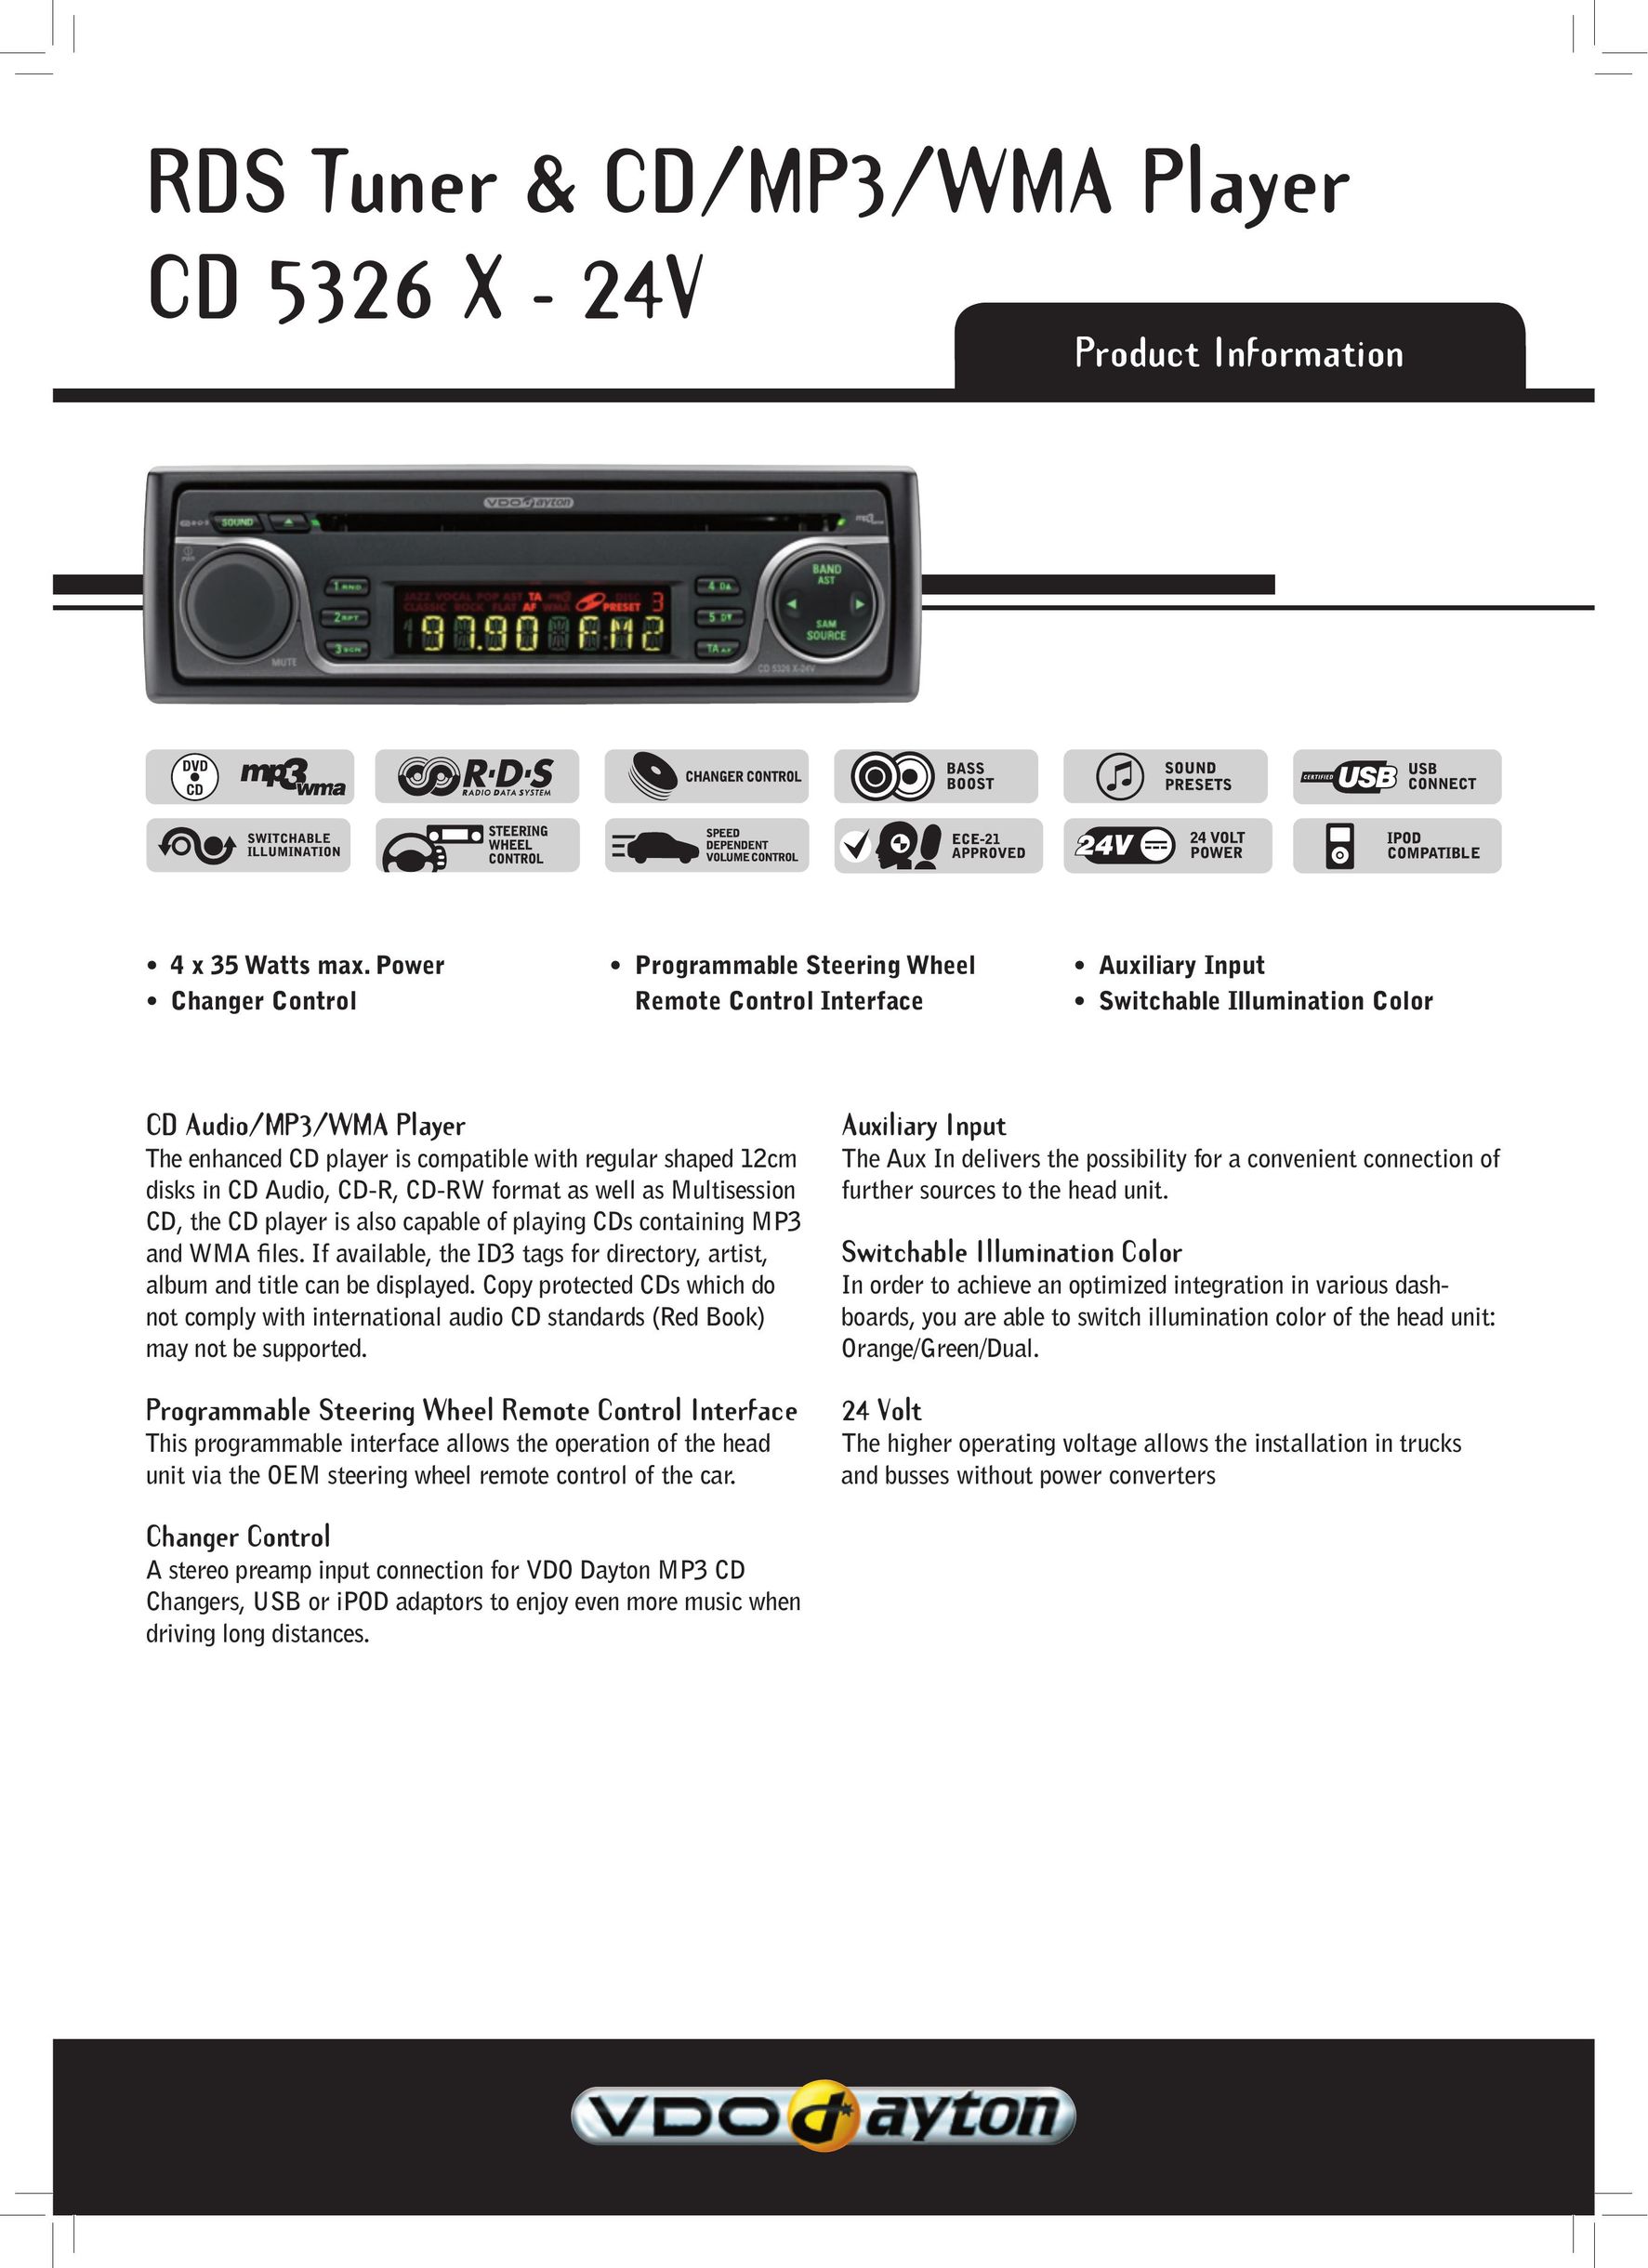 VDO Dayton CD 5326 X - 24V Car Stereo System User Manual